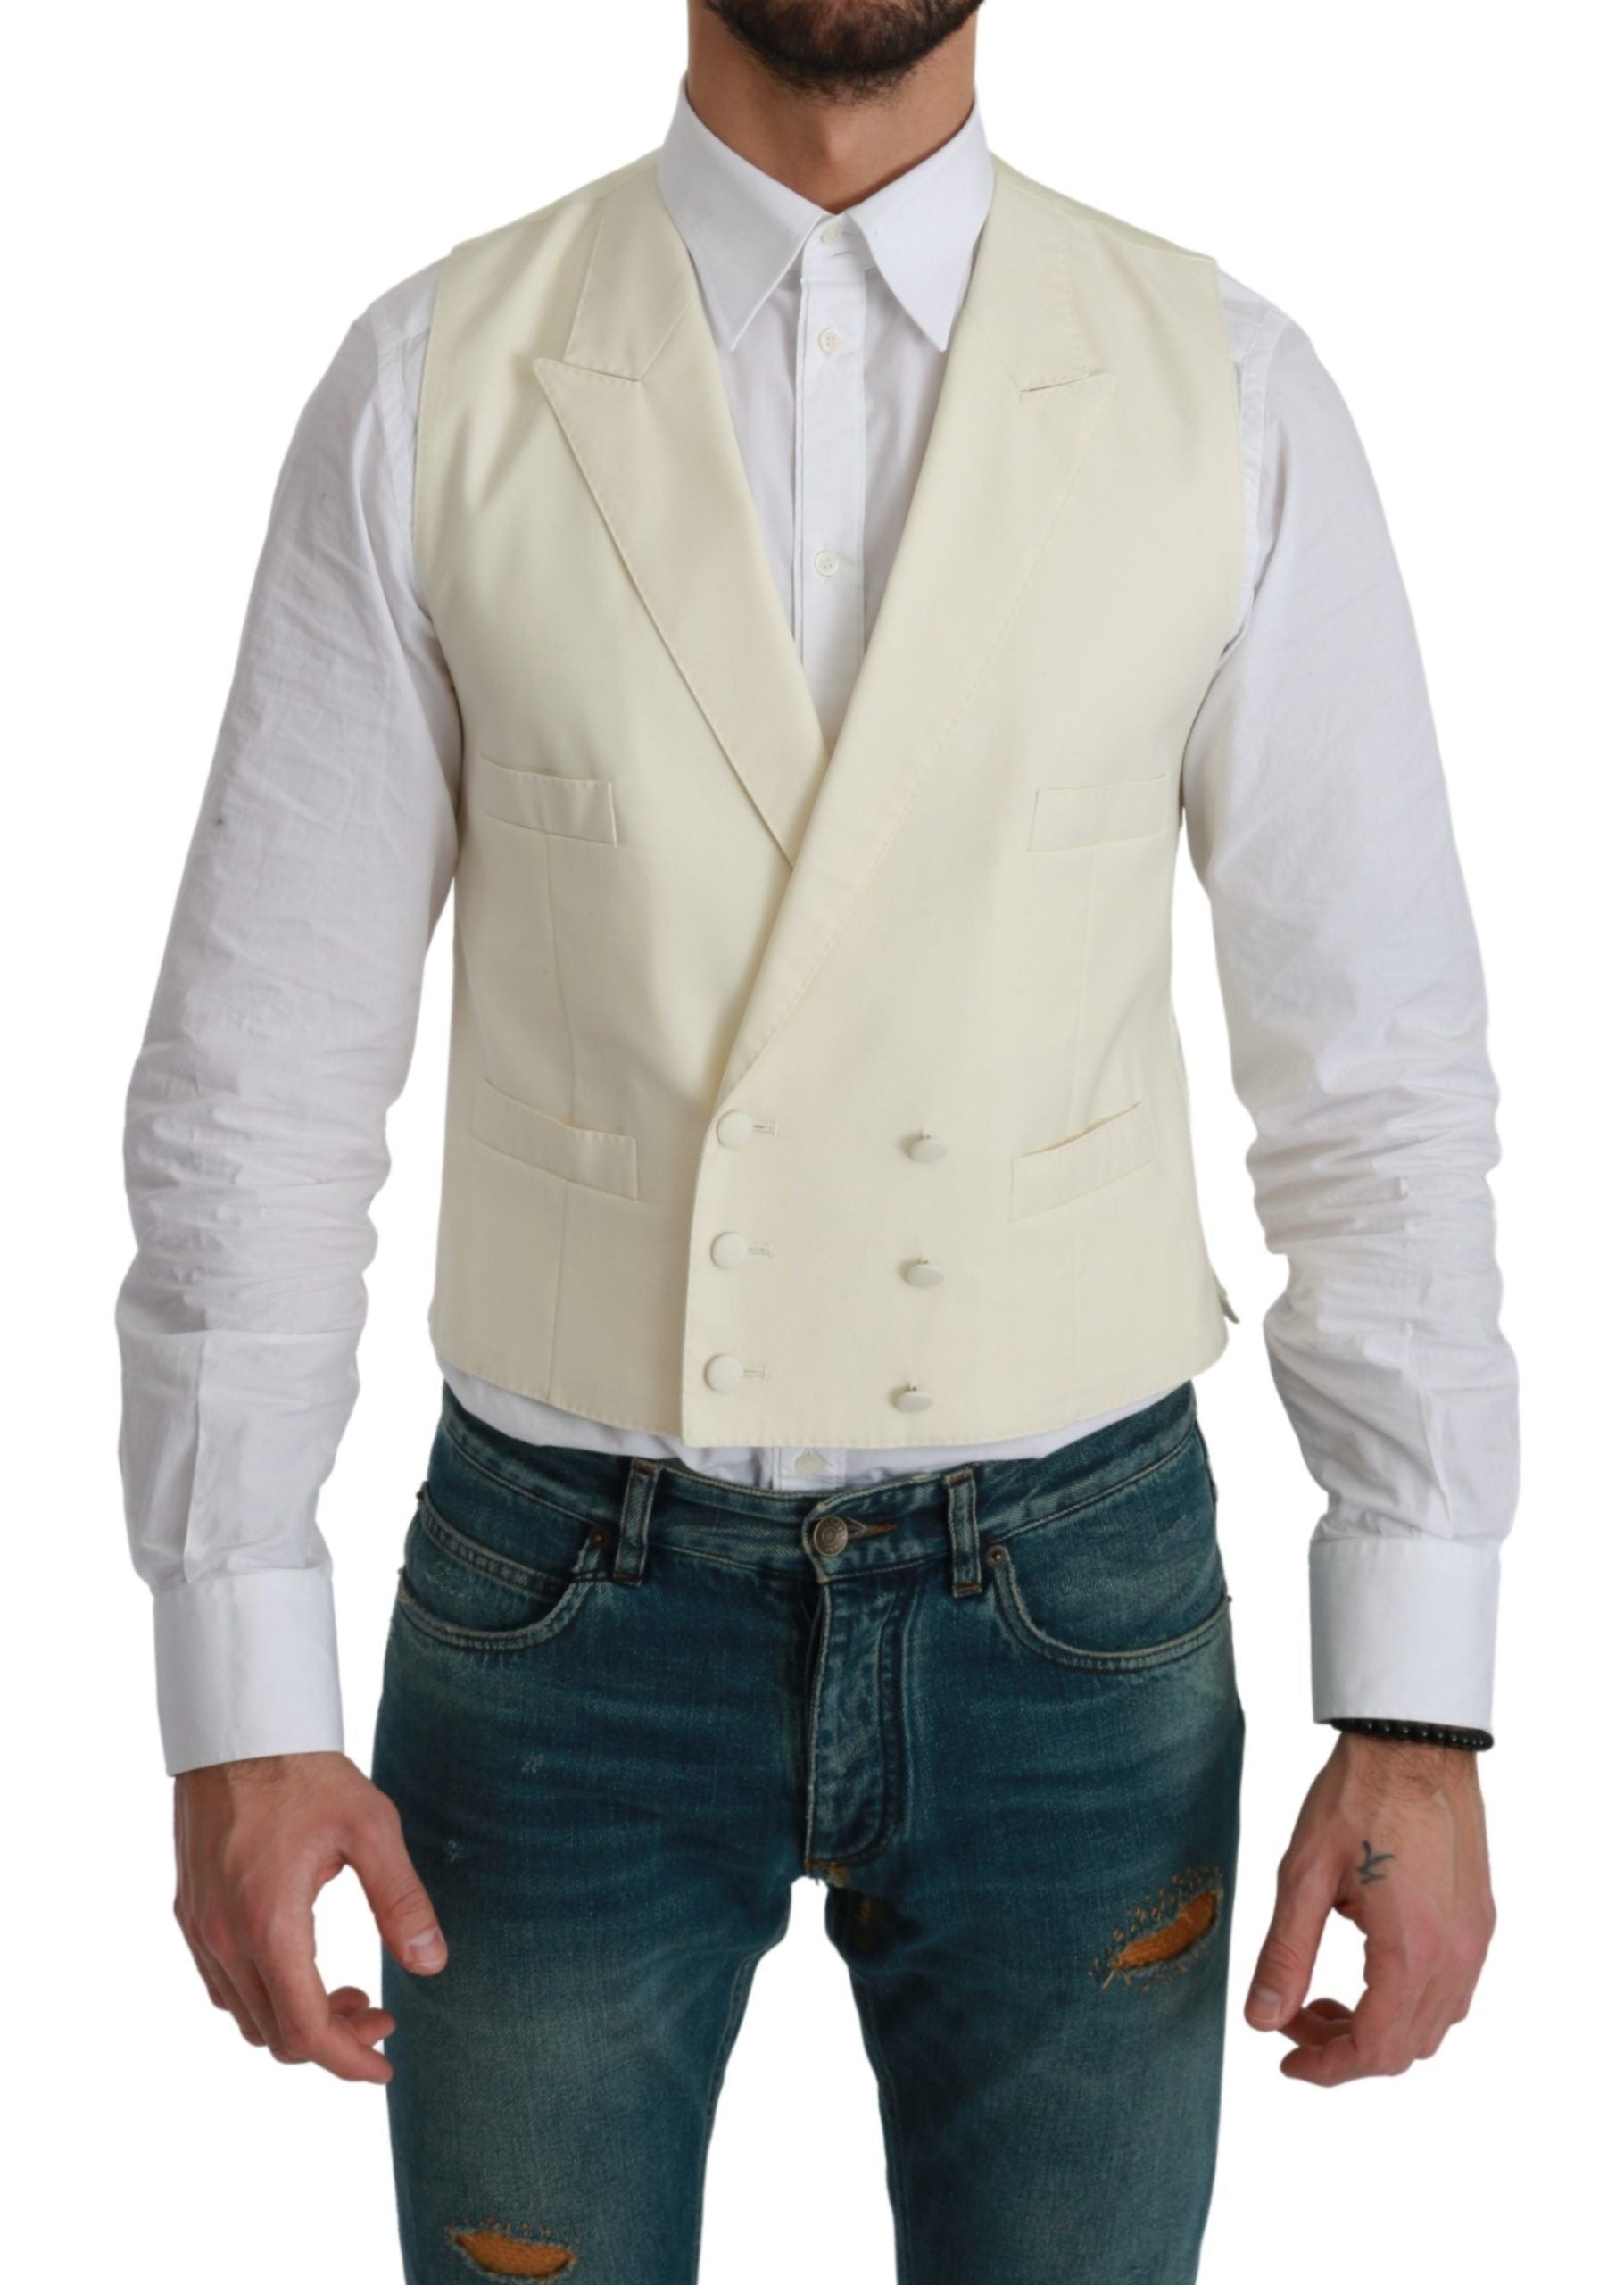 Elegant Cream Wool Dress Vest